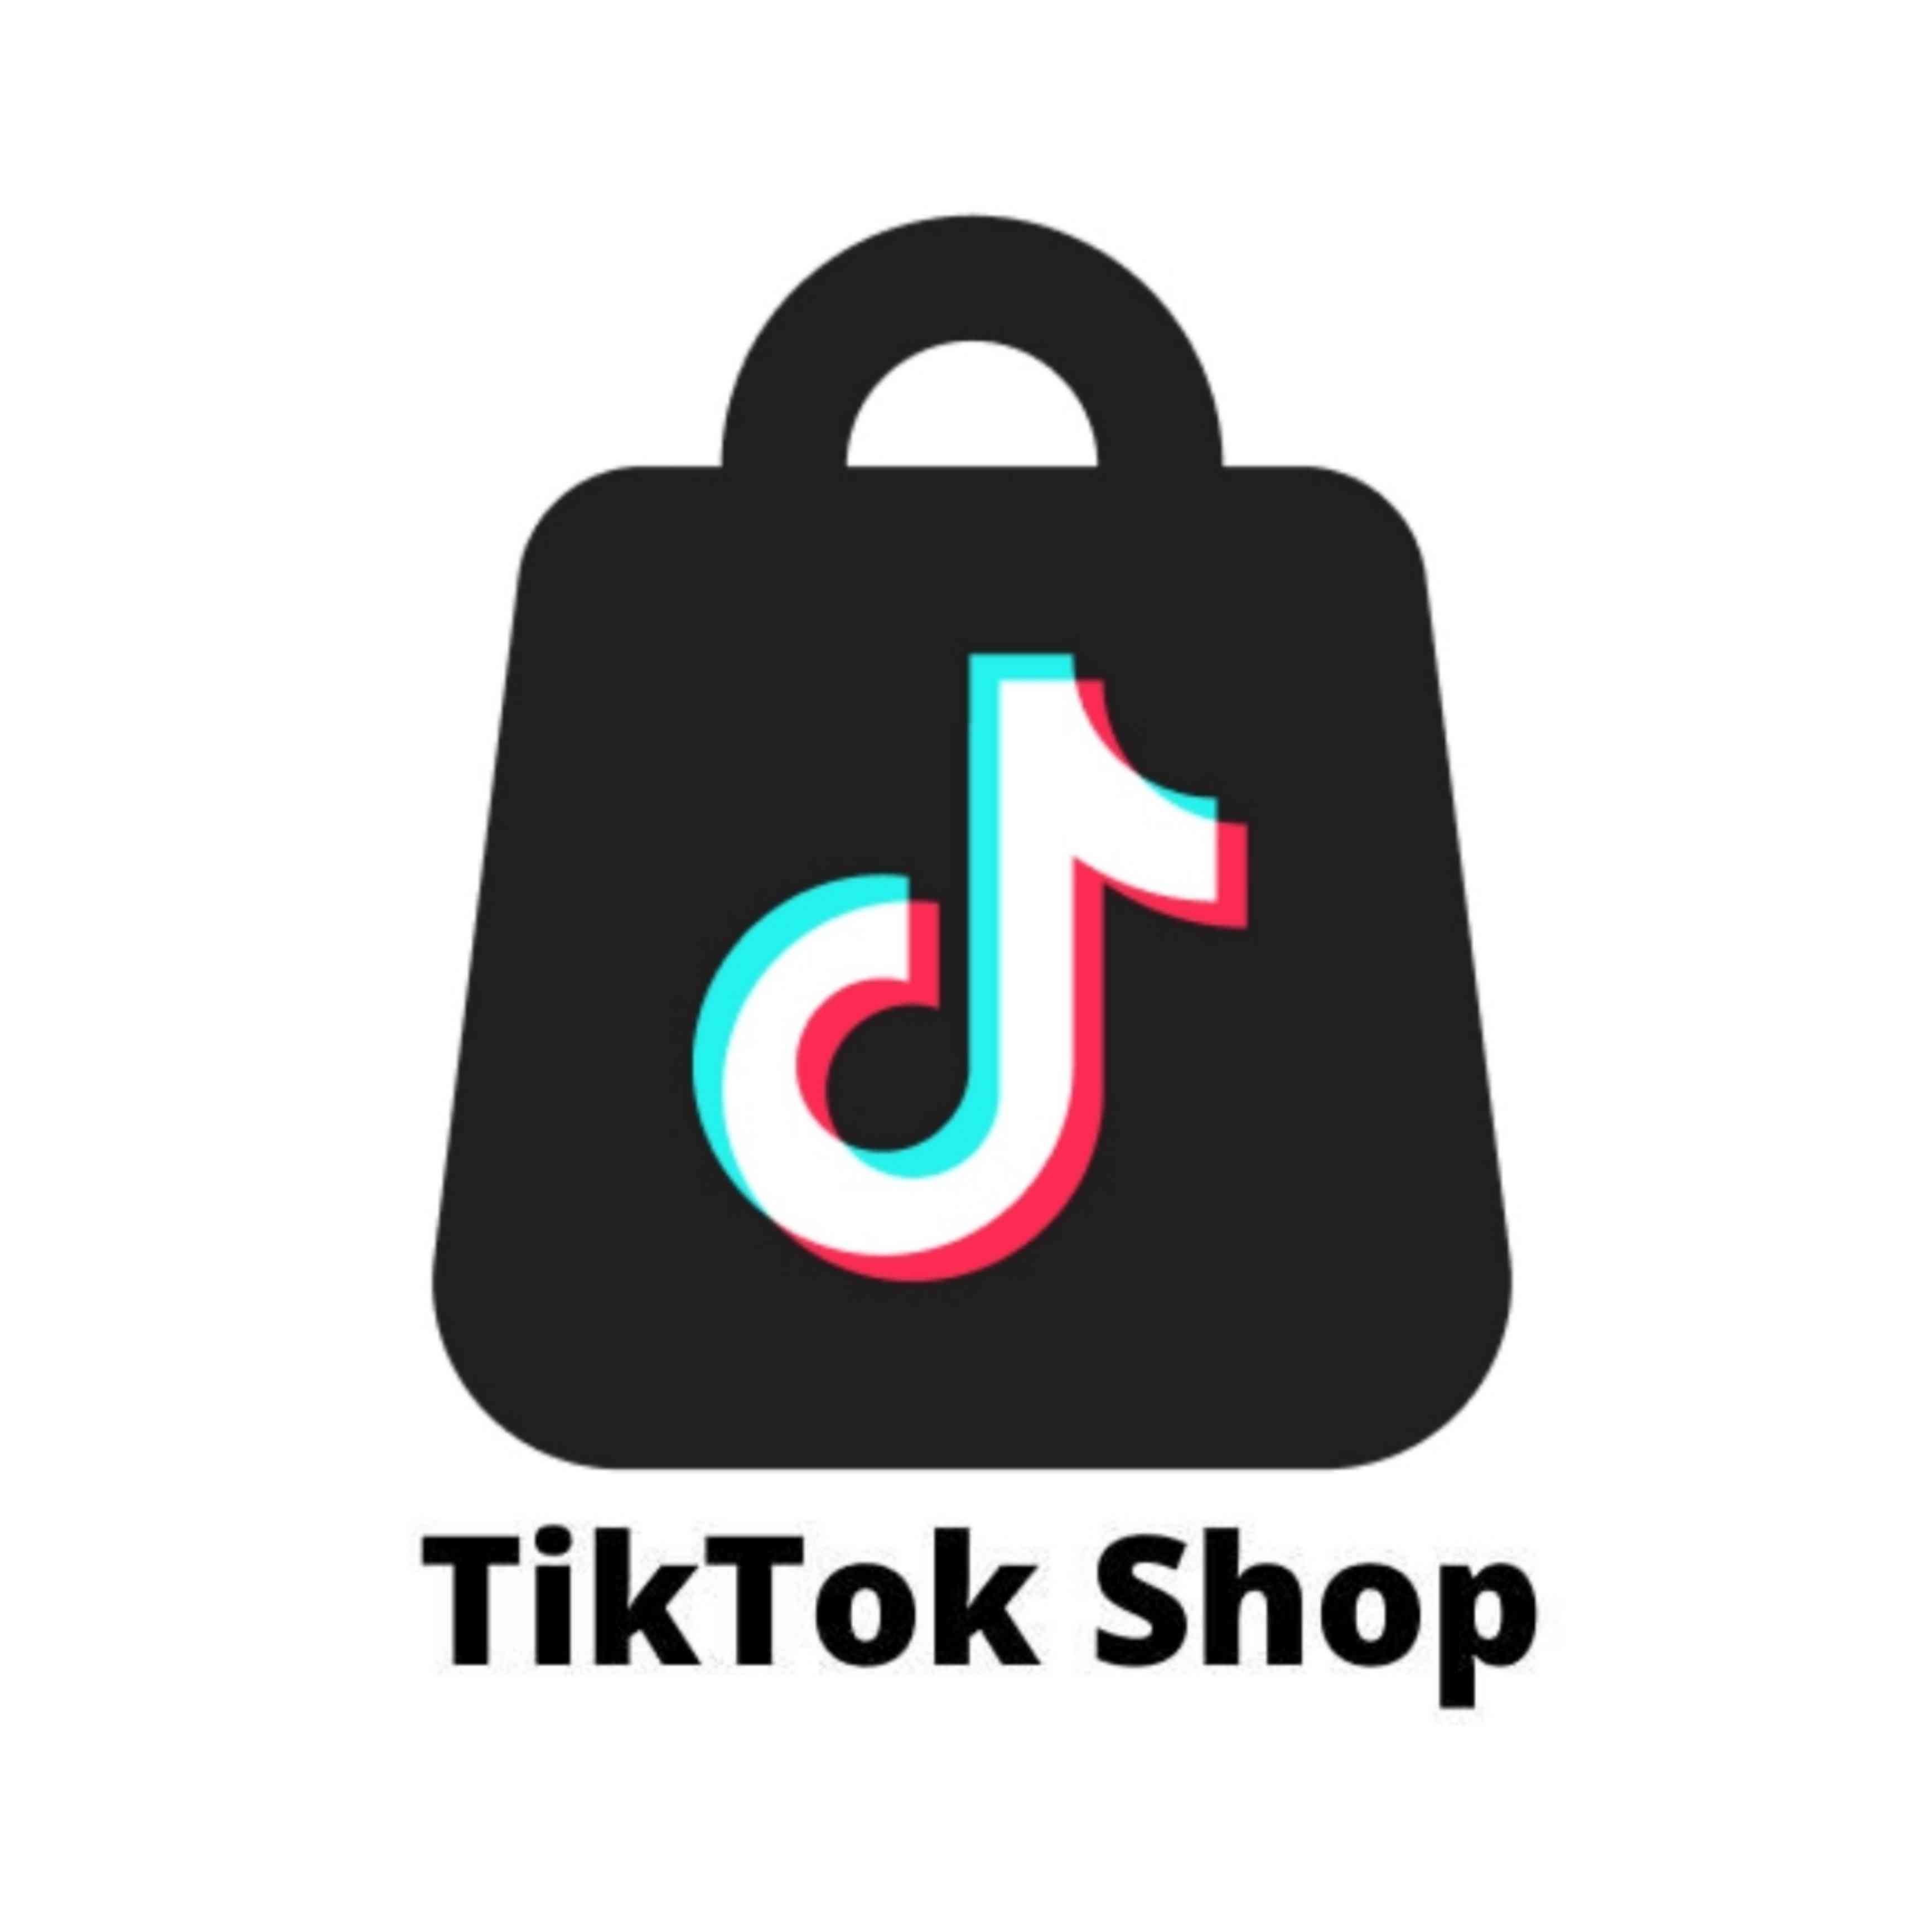 Tiktok shop